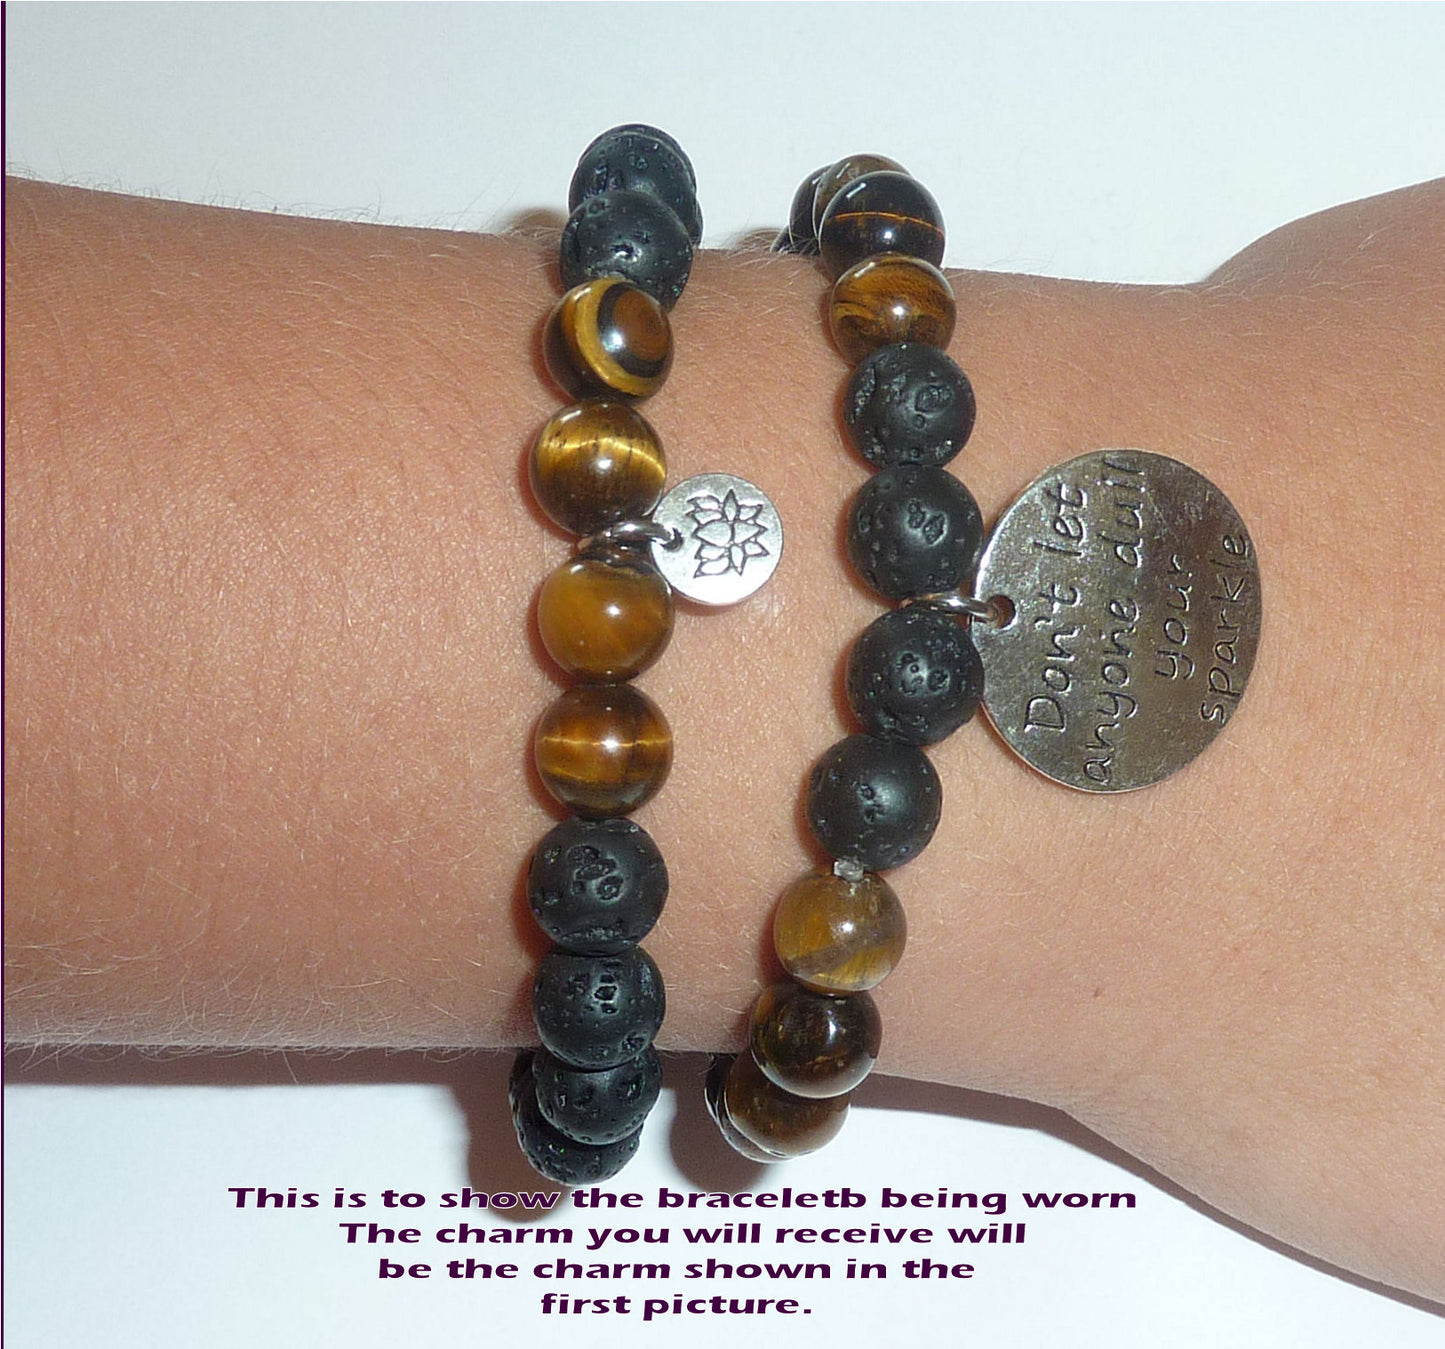 You are my Sunshine - Women's Tiger Eye & Black Lava Diffuser Yoga Beads Charm Stretch Bracelet Gift Set